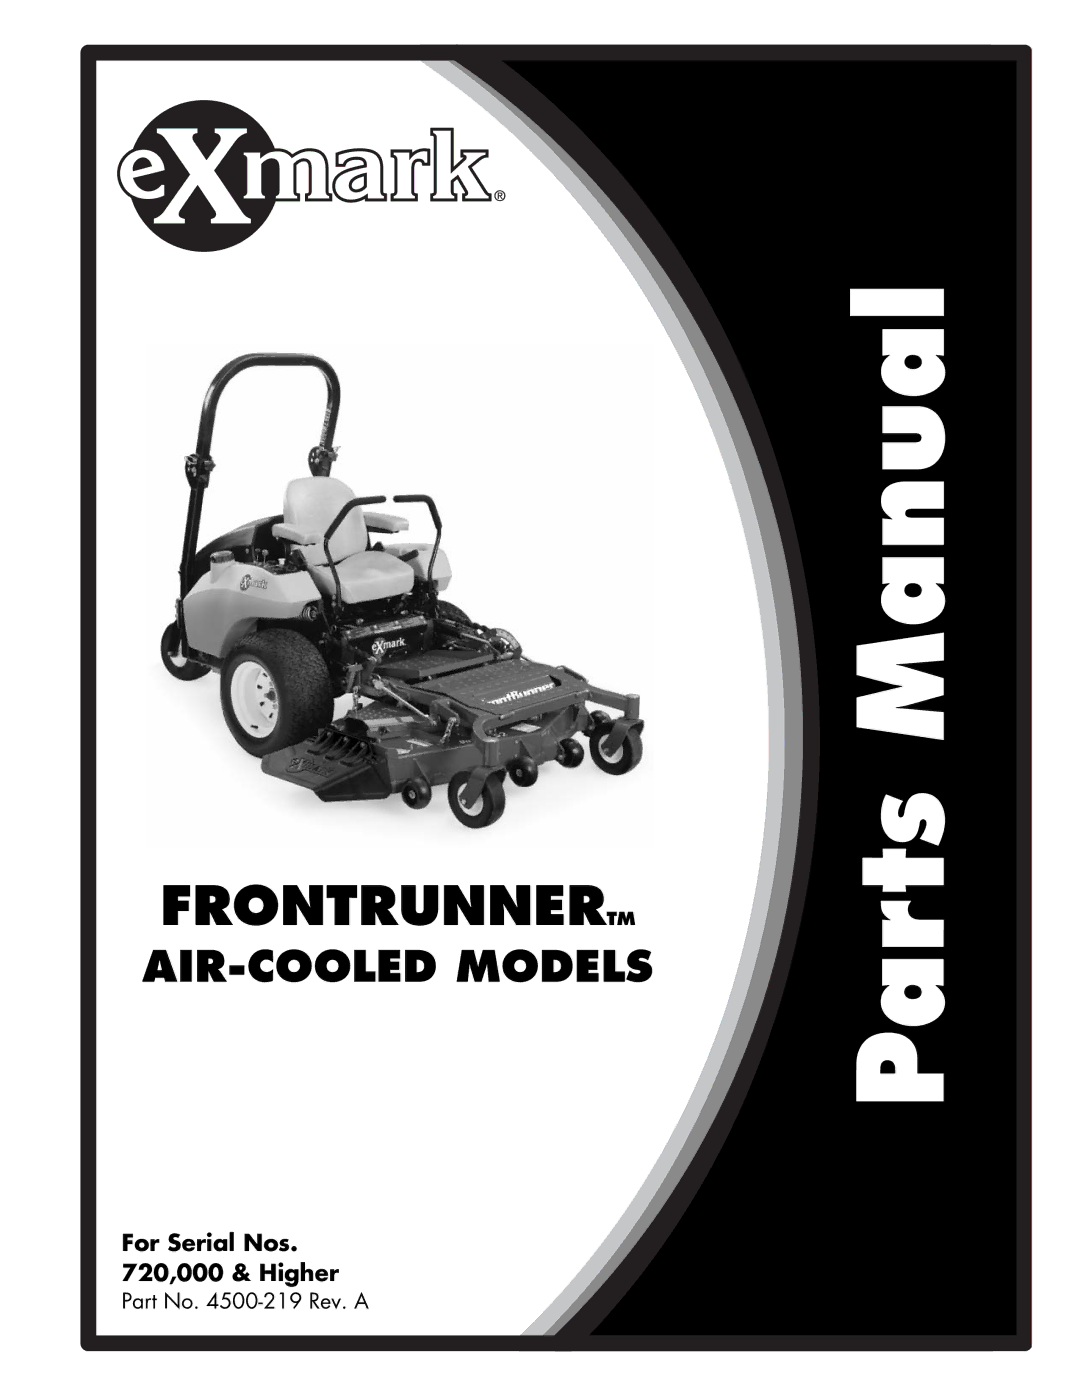 Exmark Air-Cooled manual Frontrunnertm 